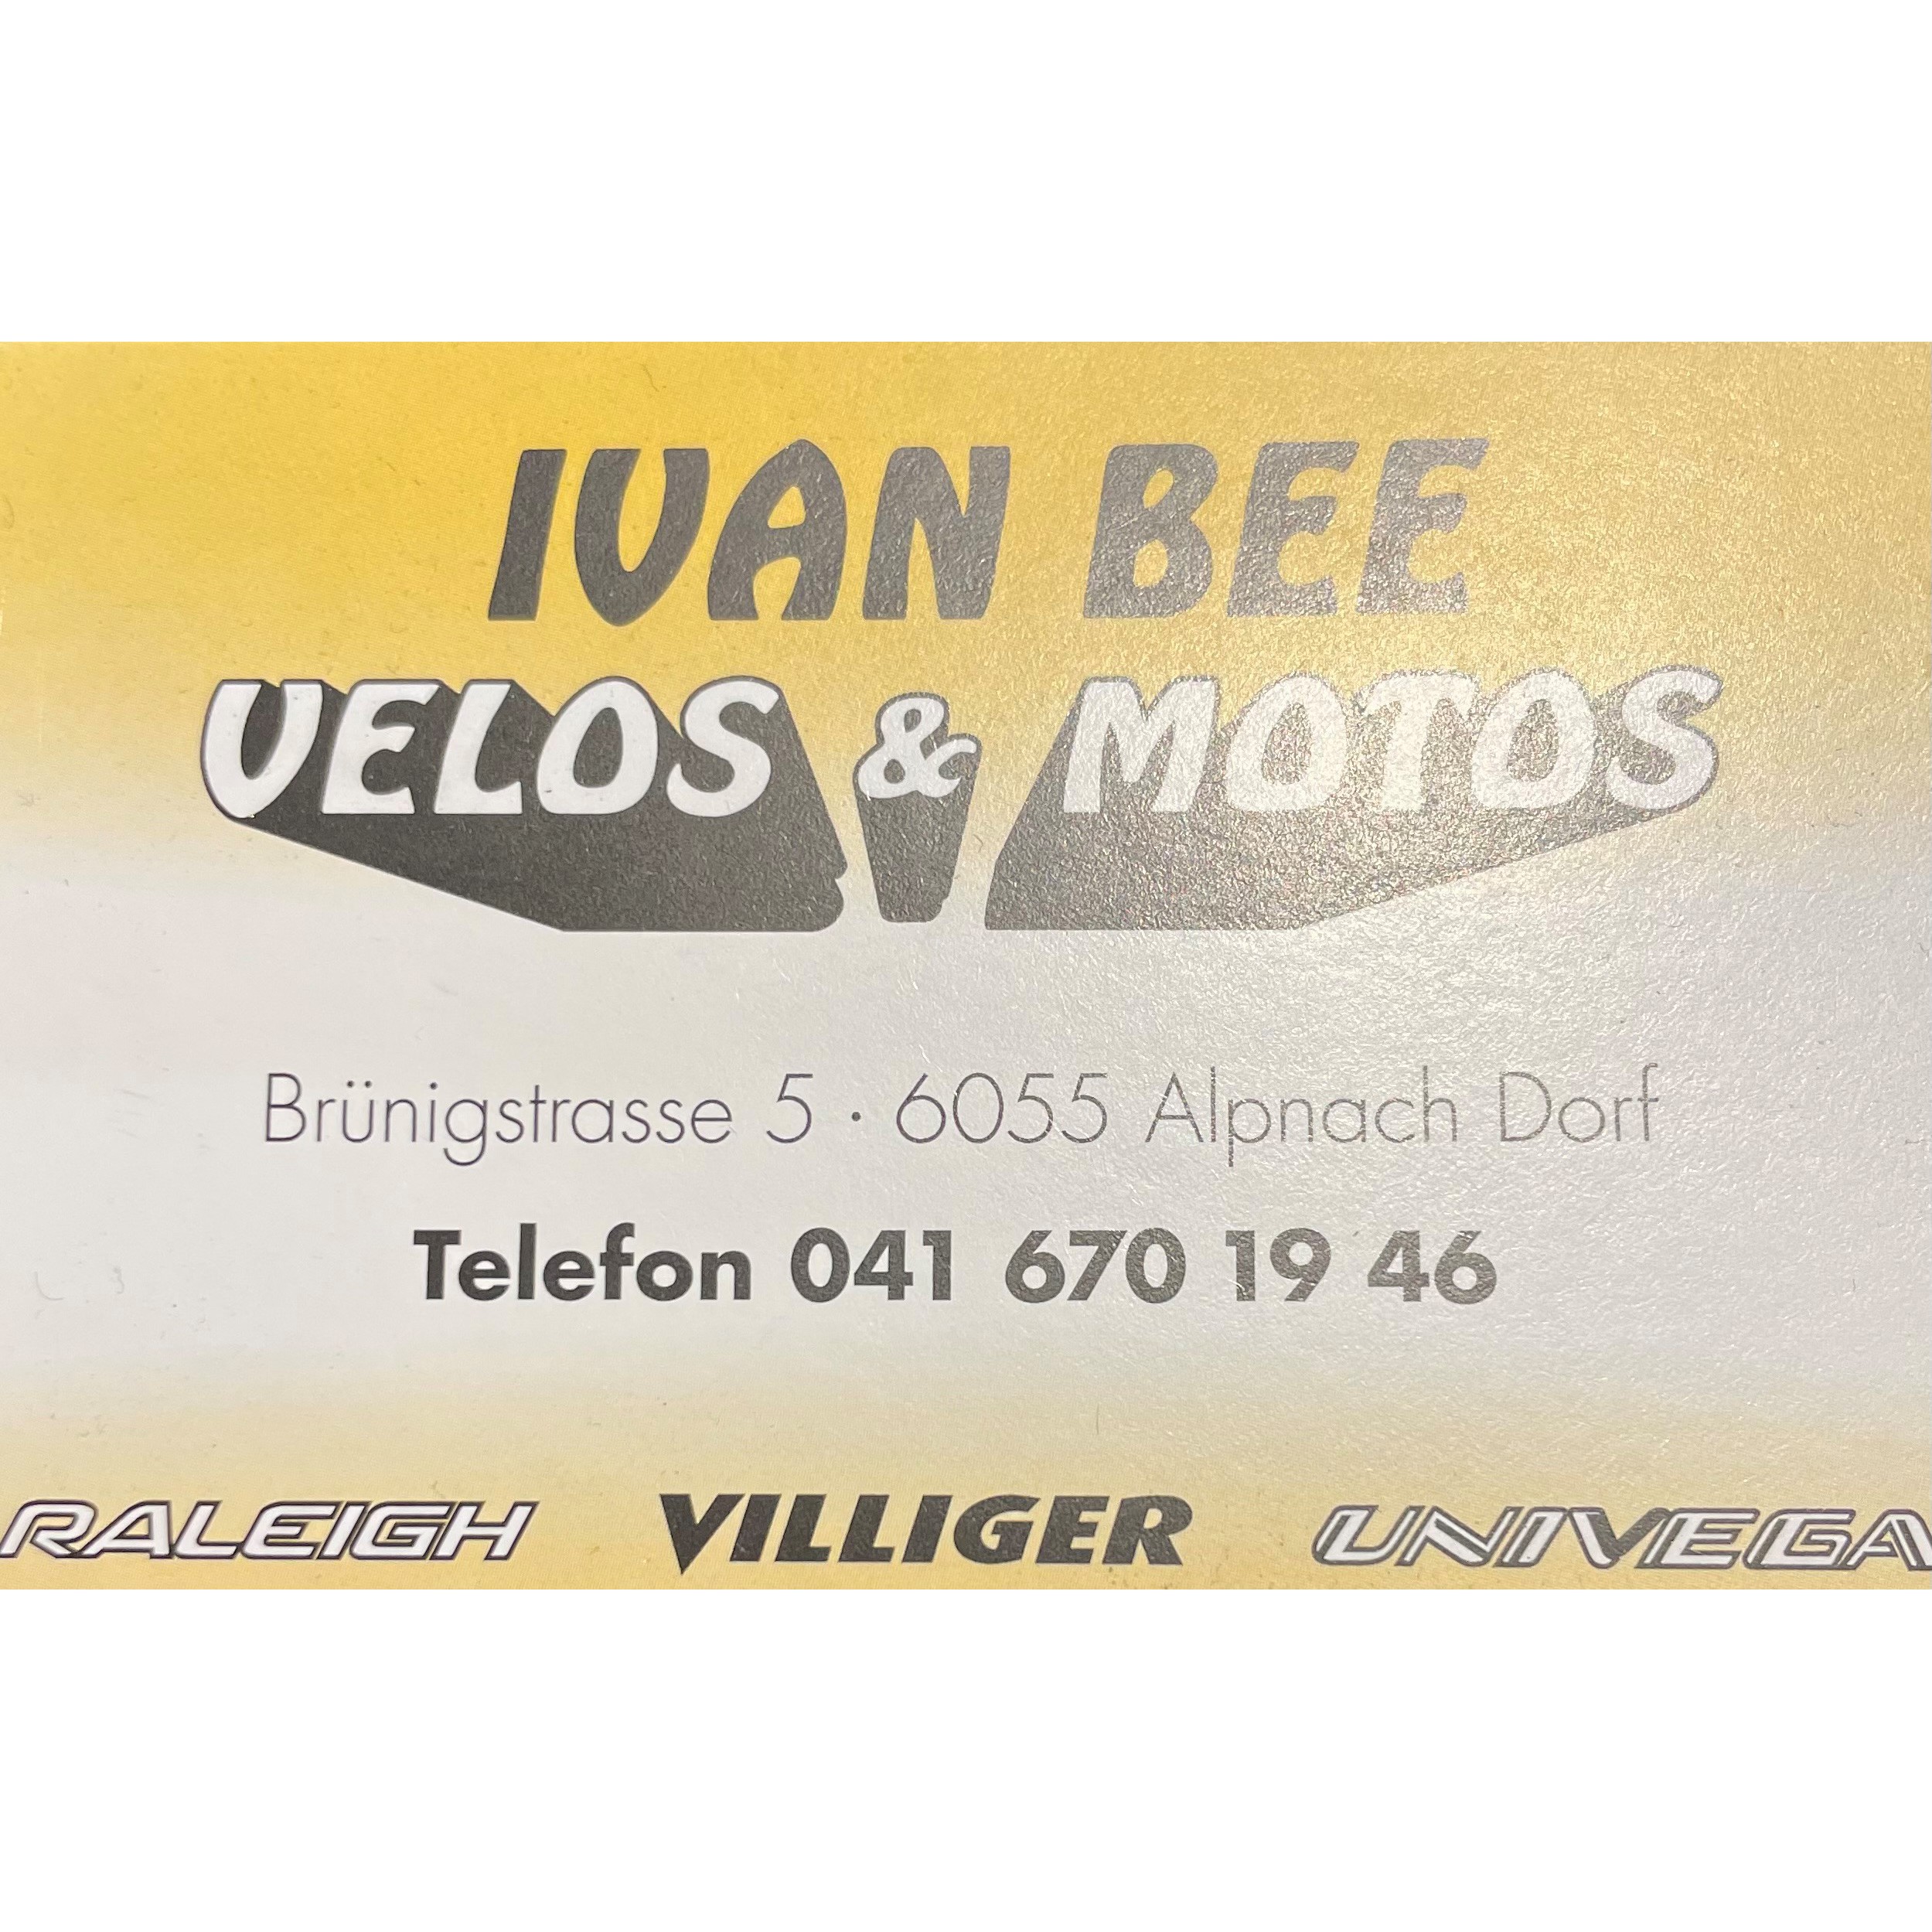 Ivan Bee Velos & Motos Logo